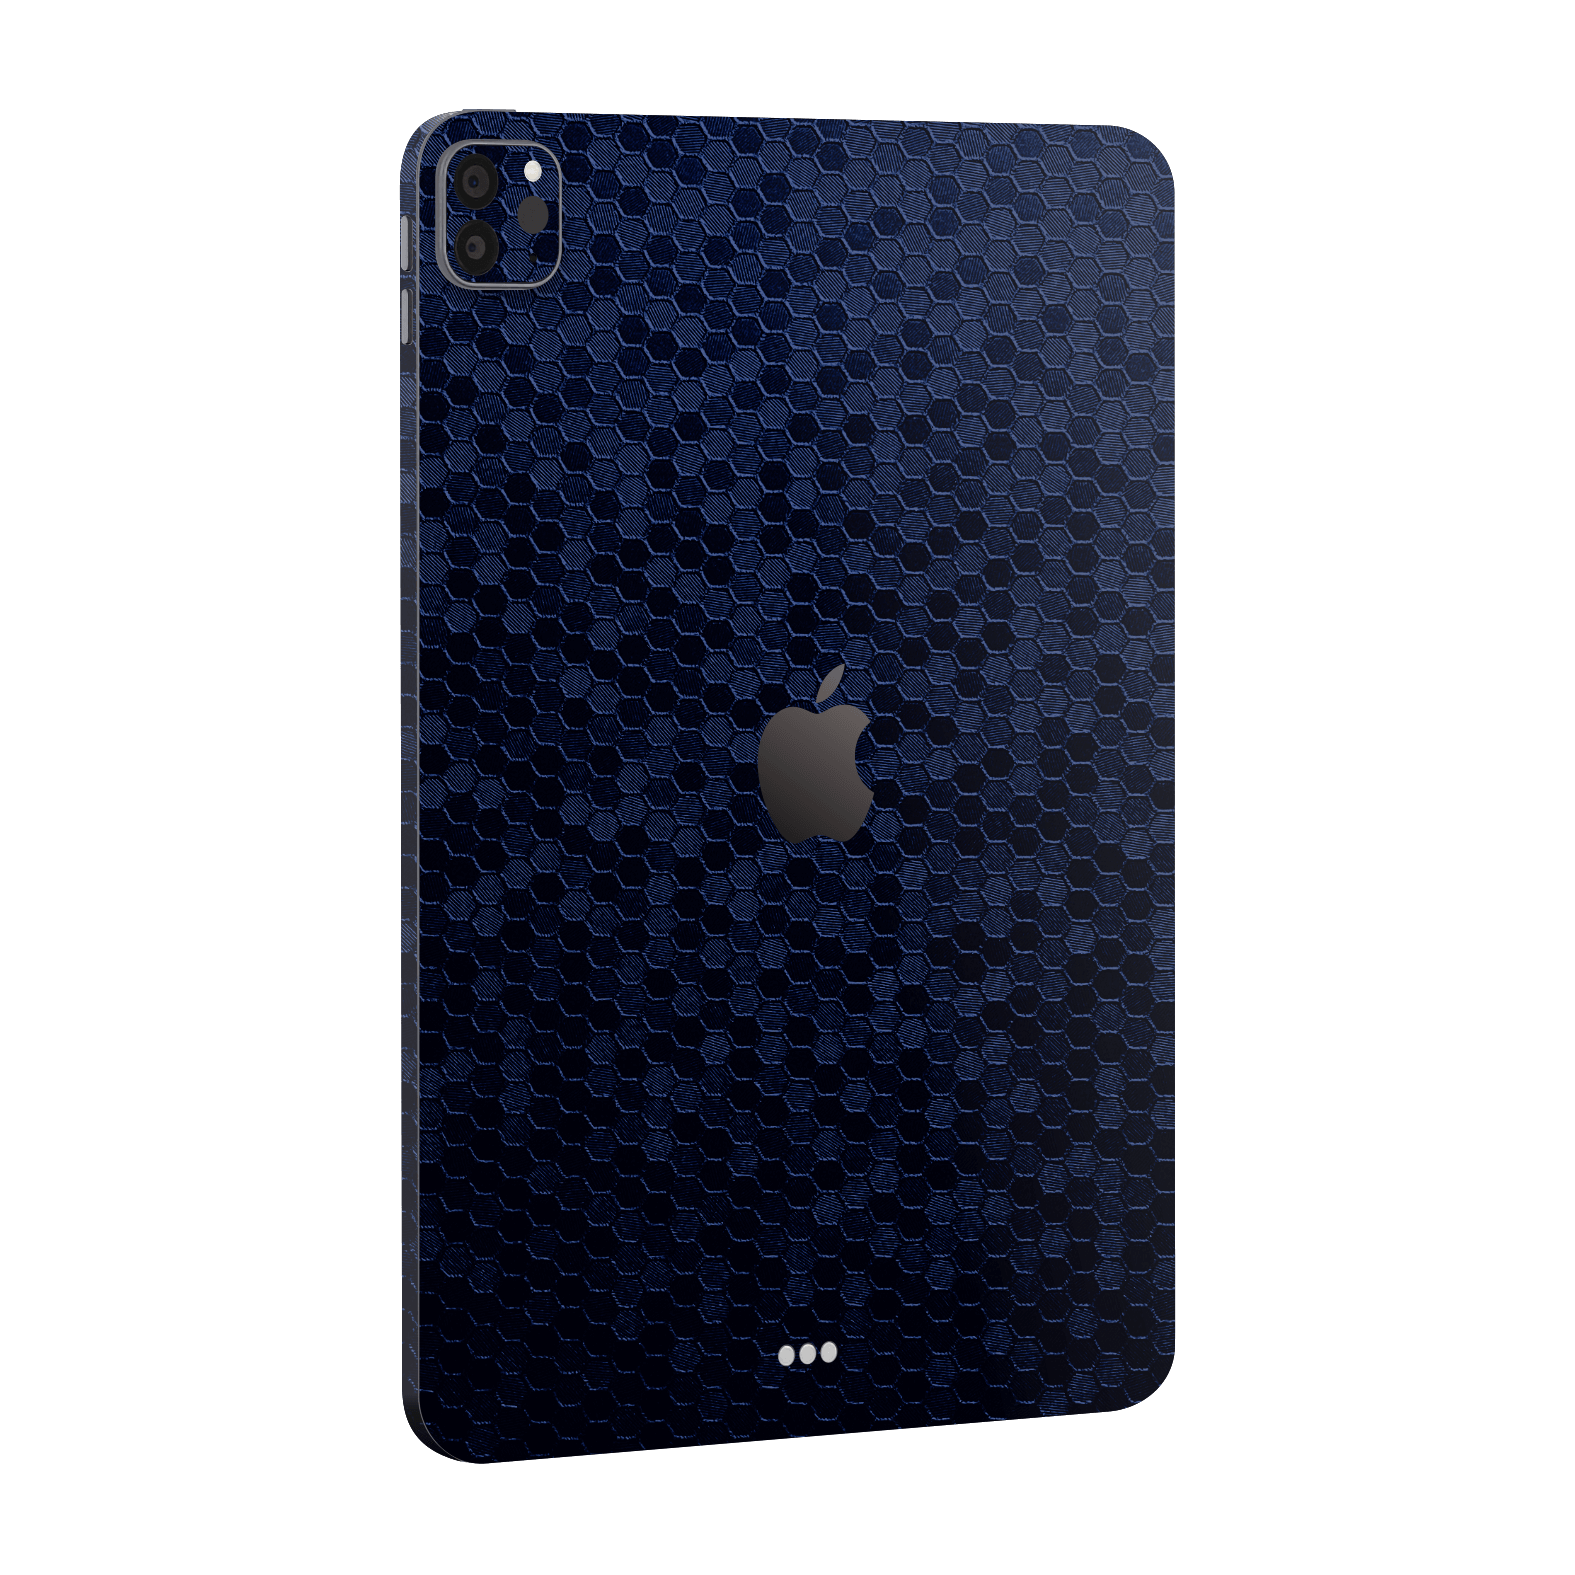 iPad PRO 12.9" (2021) Luxuria Navy Blue Honeycomb 3D Textured Skin Wrap Sticker Decal Cover Protector by EasySkinz | EasySkinz.com